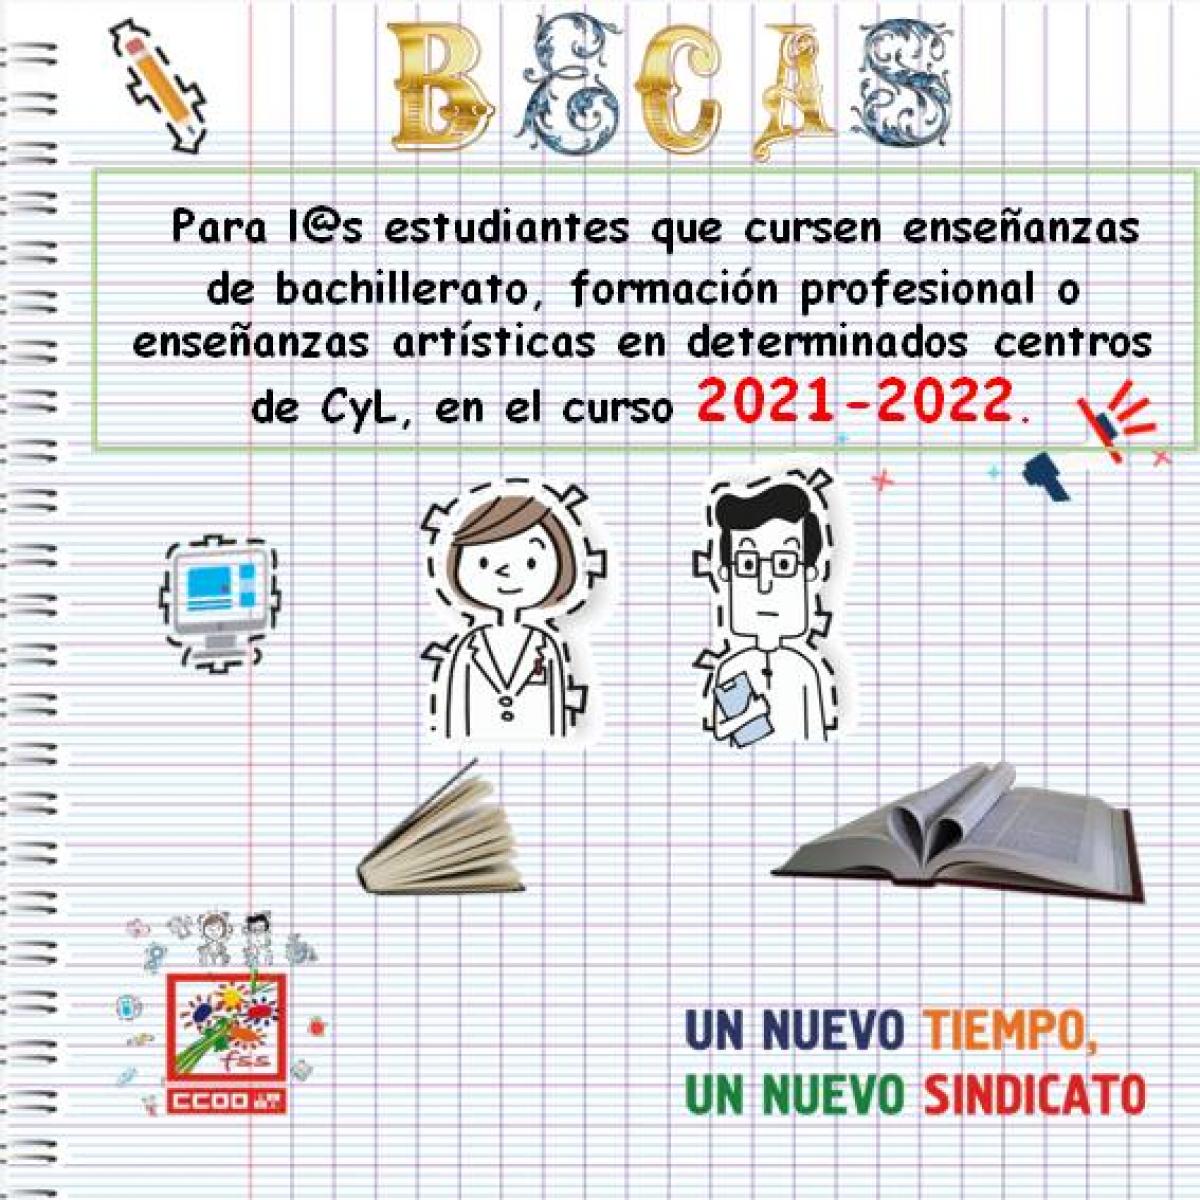 Convocatoria de BECAS para el curso 2021-2022.